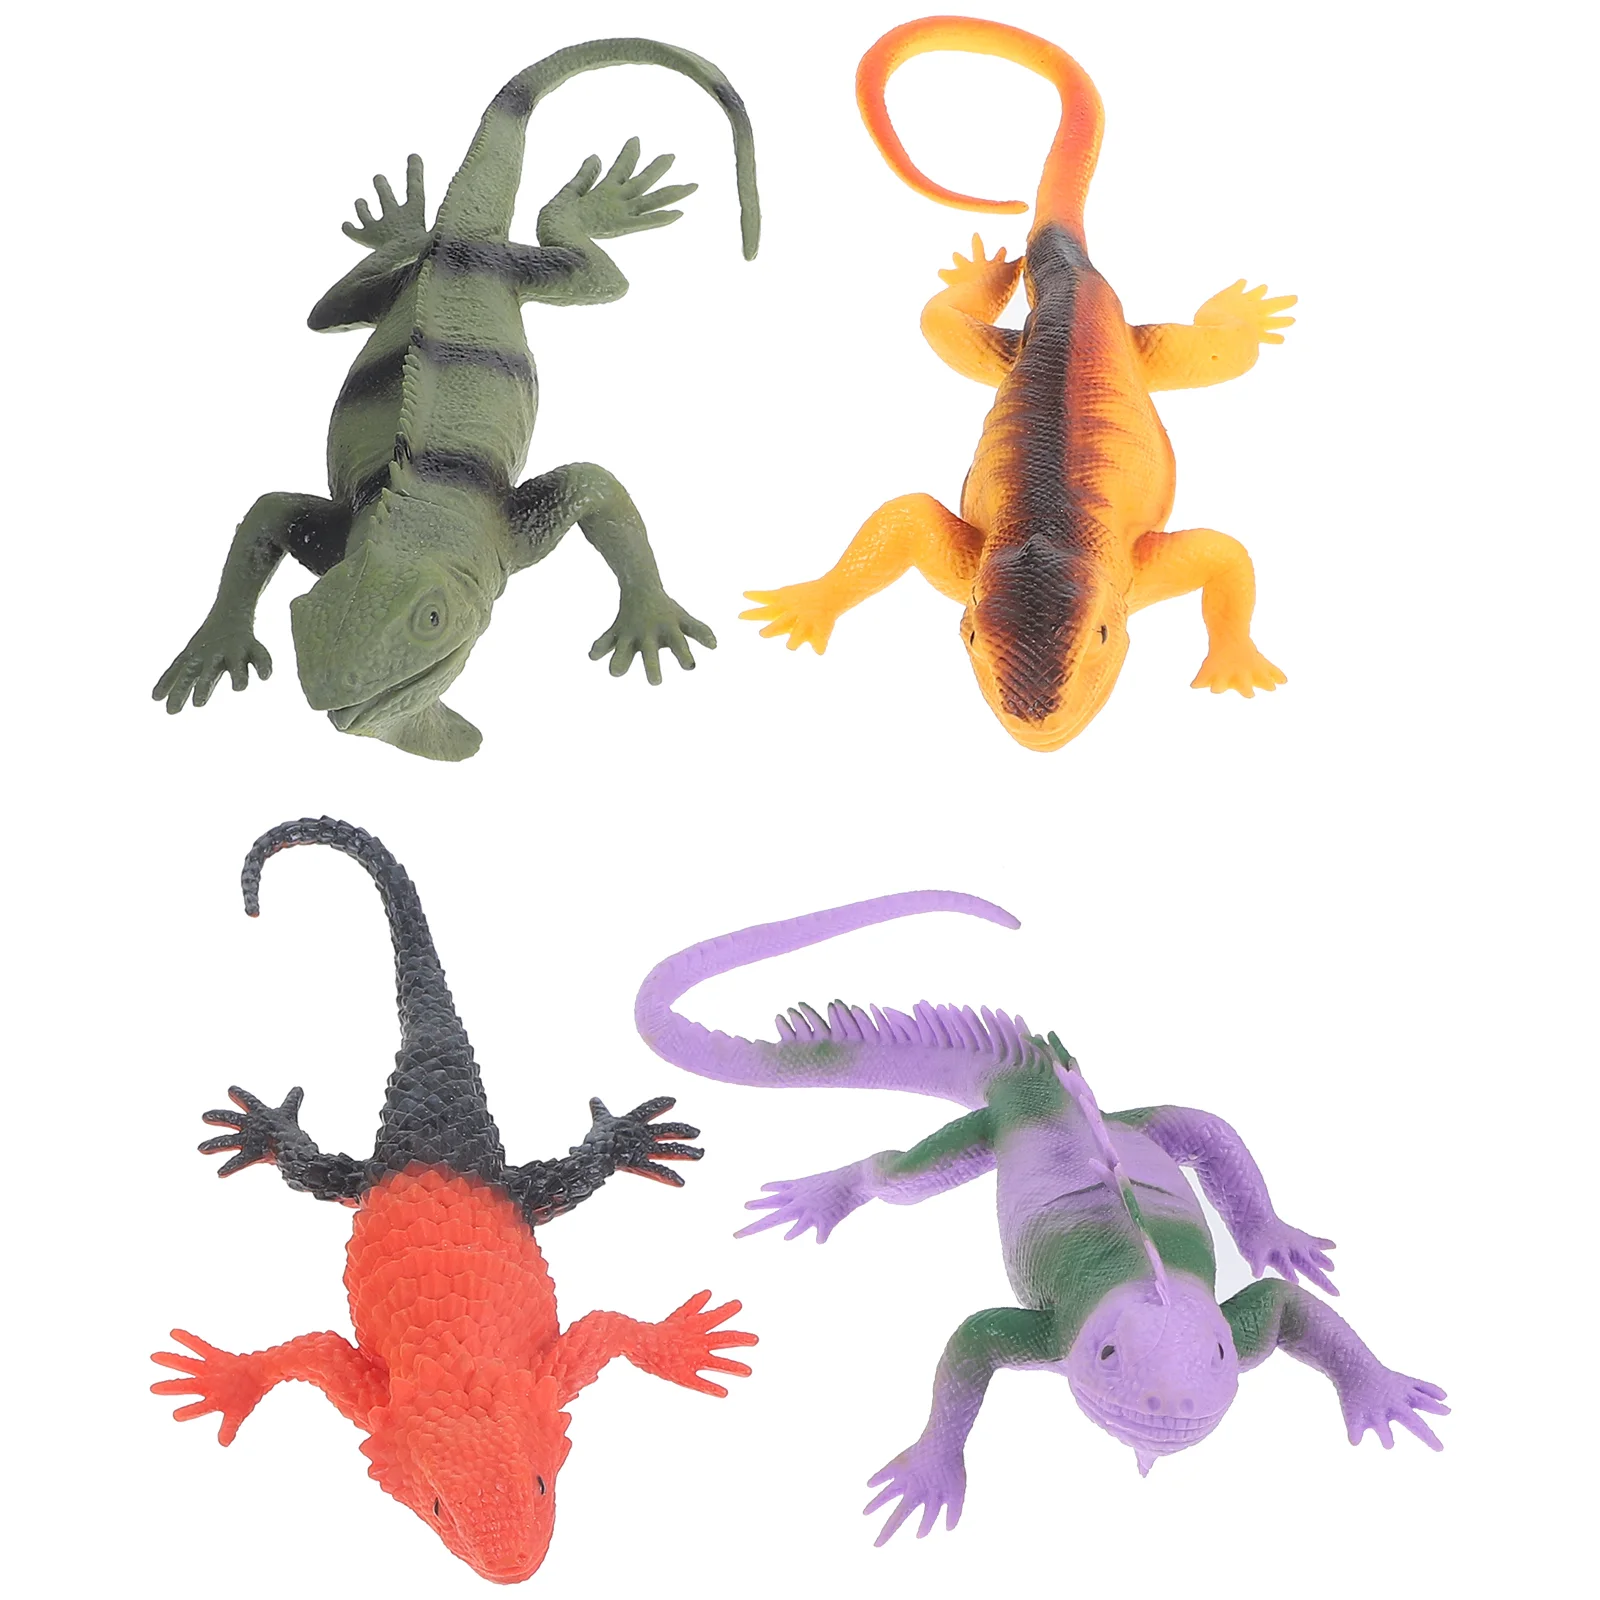 

4 Pcs Lizard Model Toys Simulation Figurine Small Animals Recognition Figurines Plastic Child